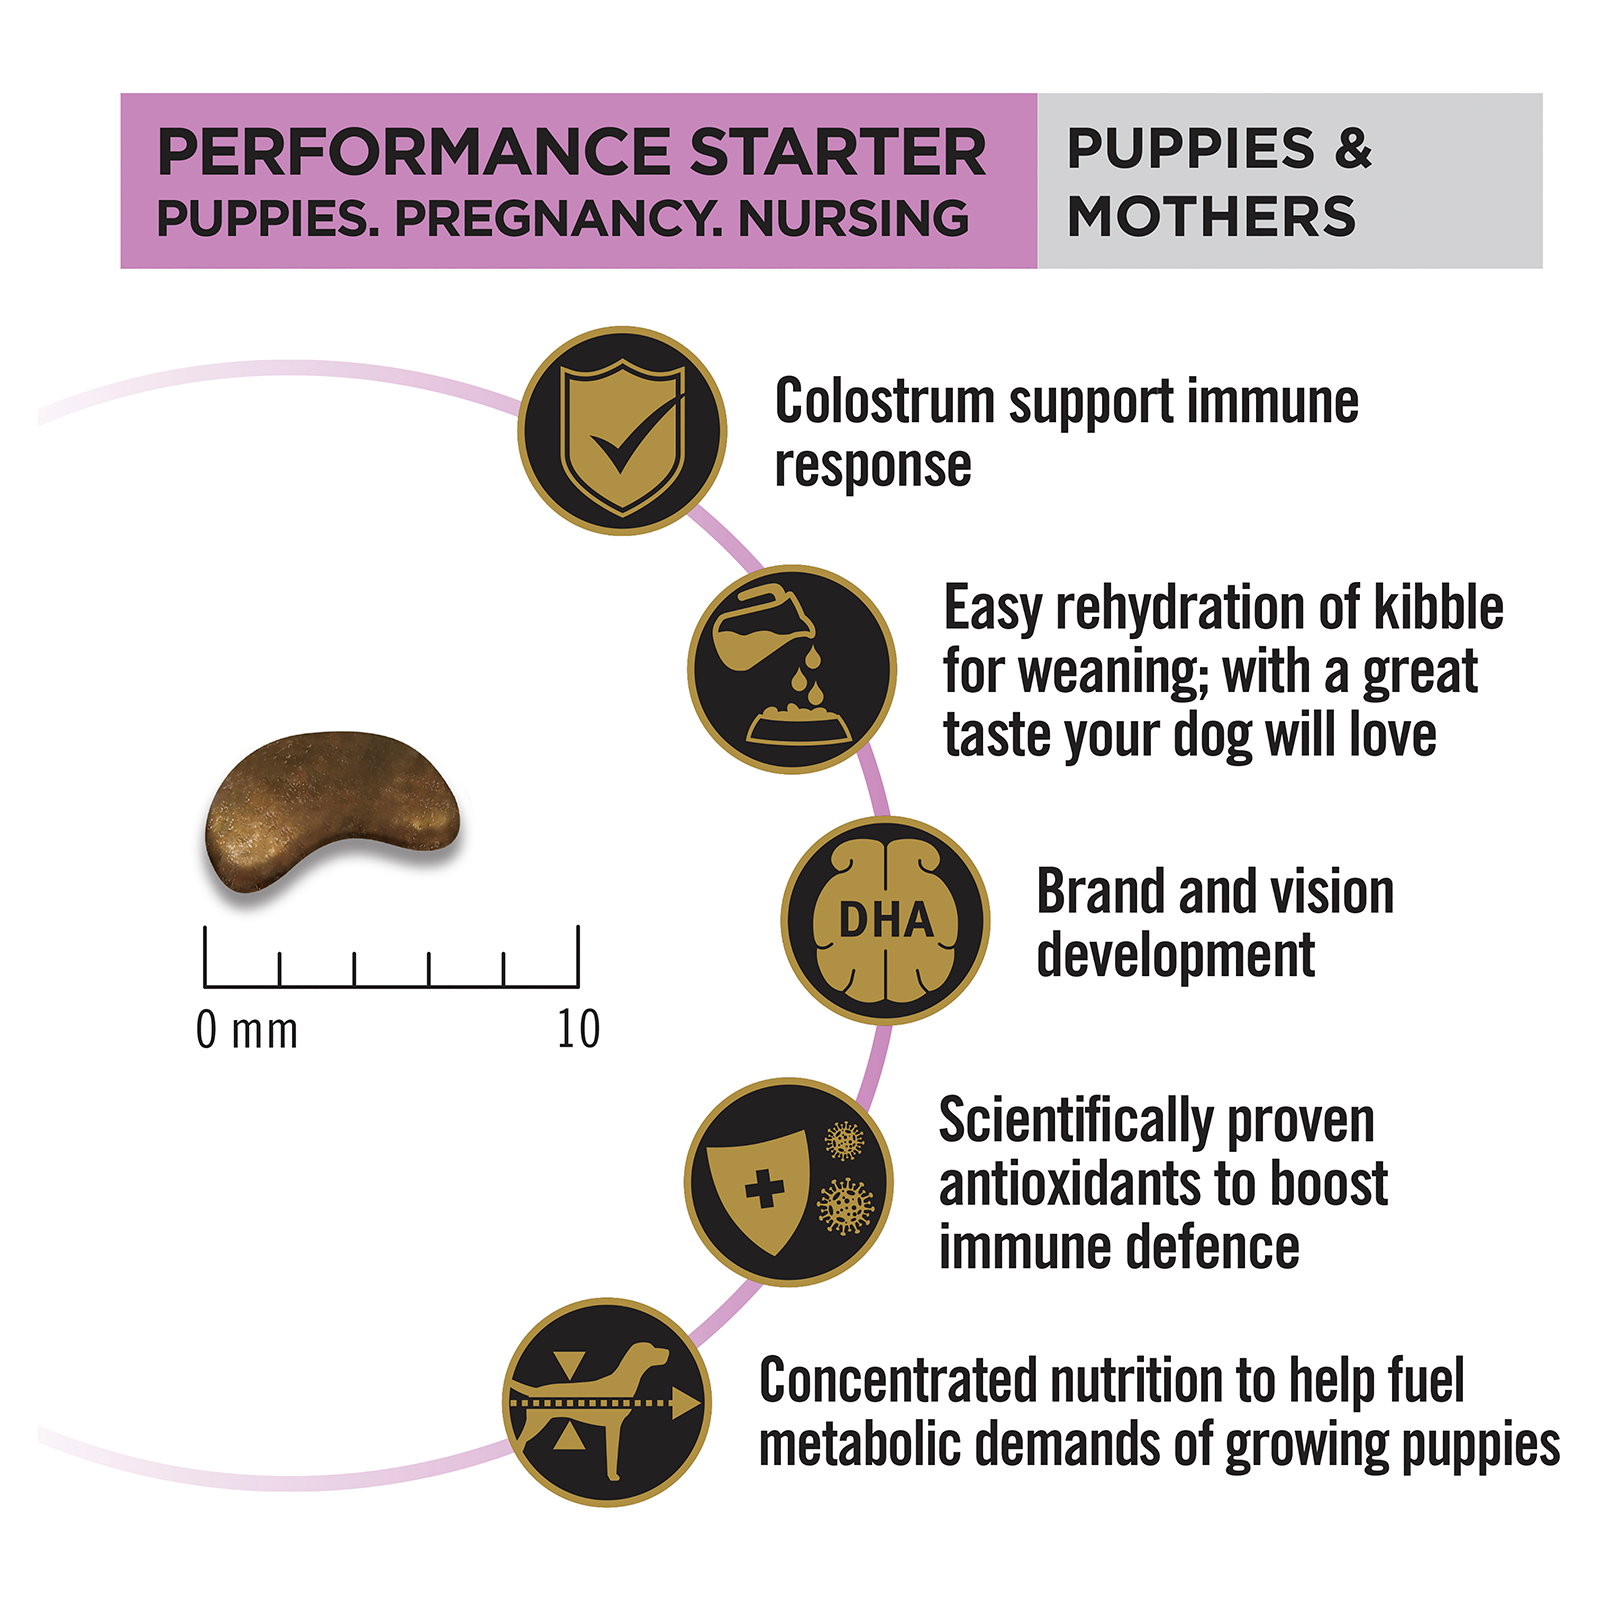 Pro Plan Dog Food Mother & Puppy Performance Chicken